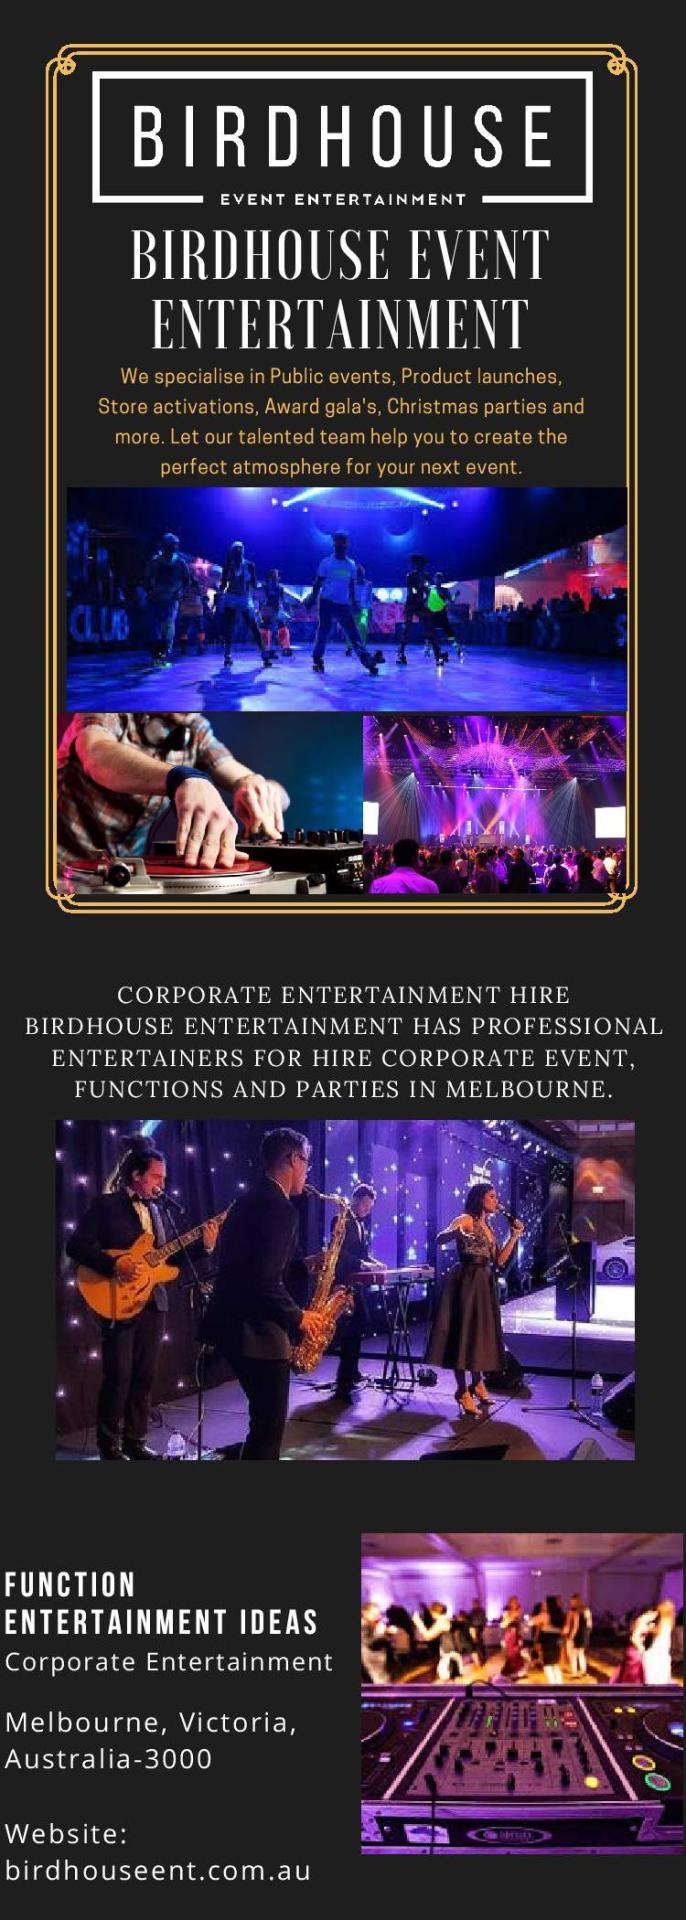 Corporate Entertainment Melbourne.jpg  by birdhouse